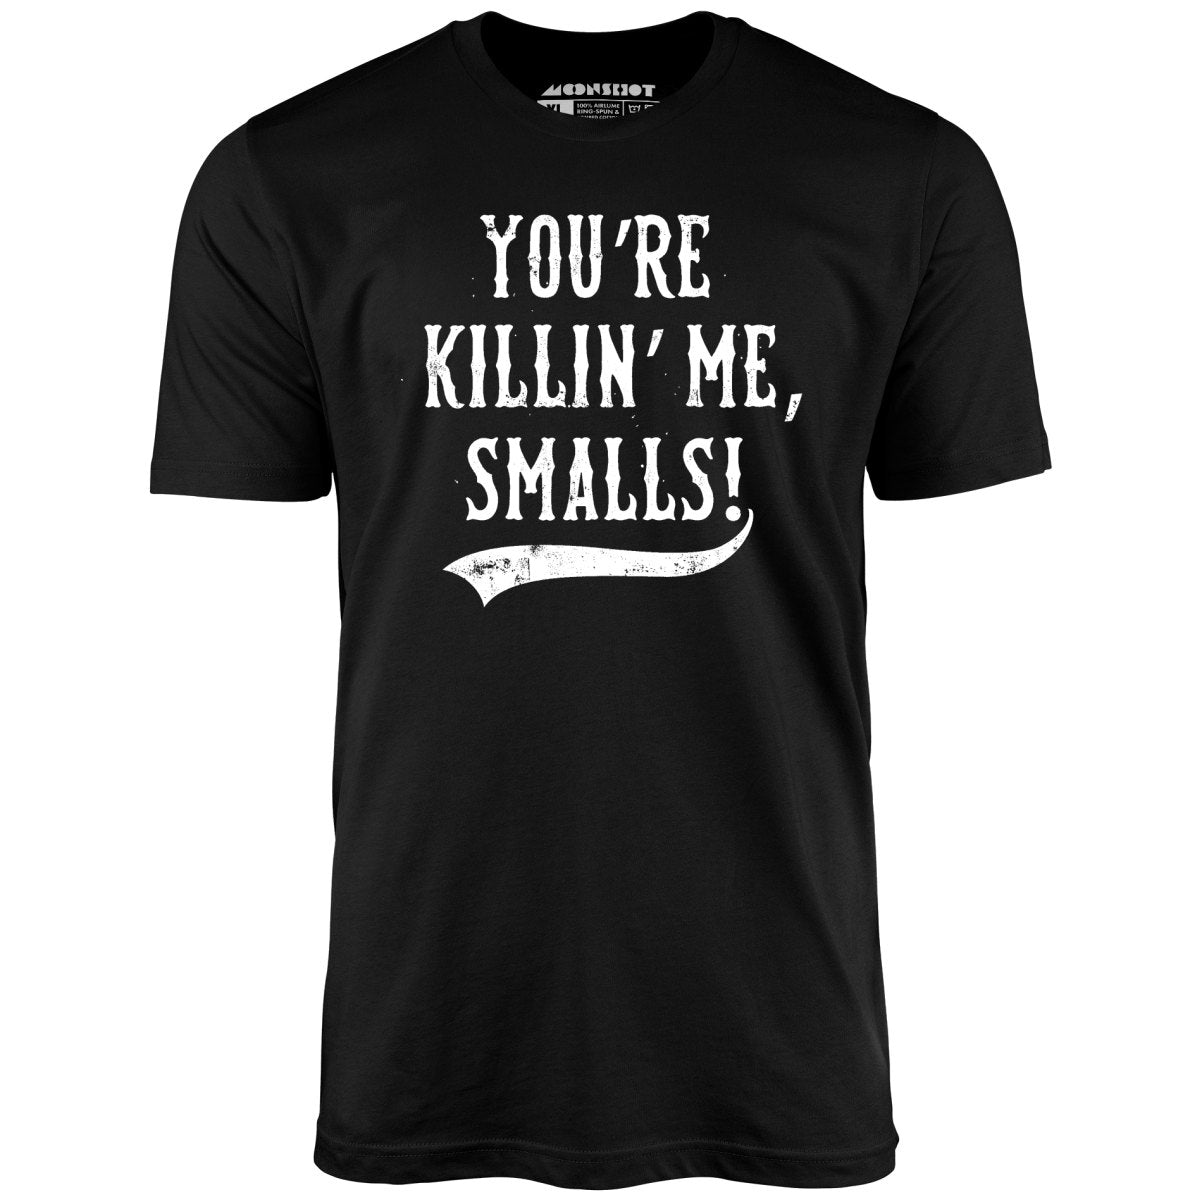 You're Killin' Me, Smalls! - Unisex T-Shirt